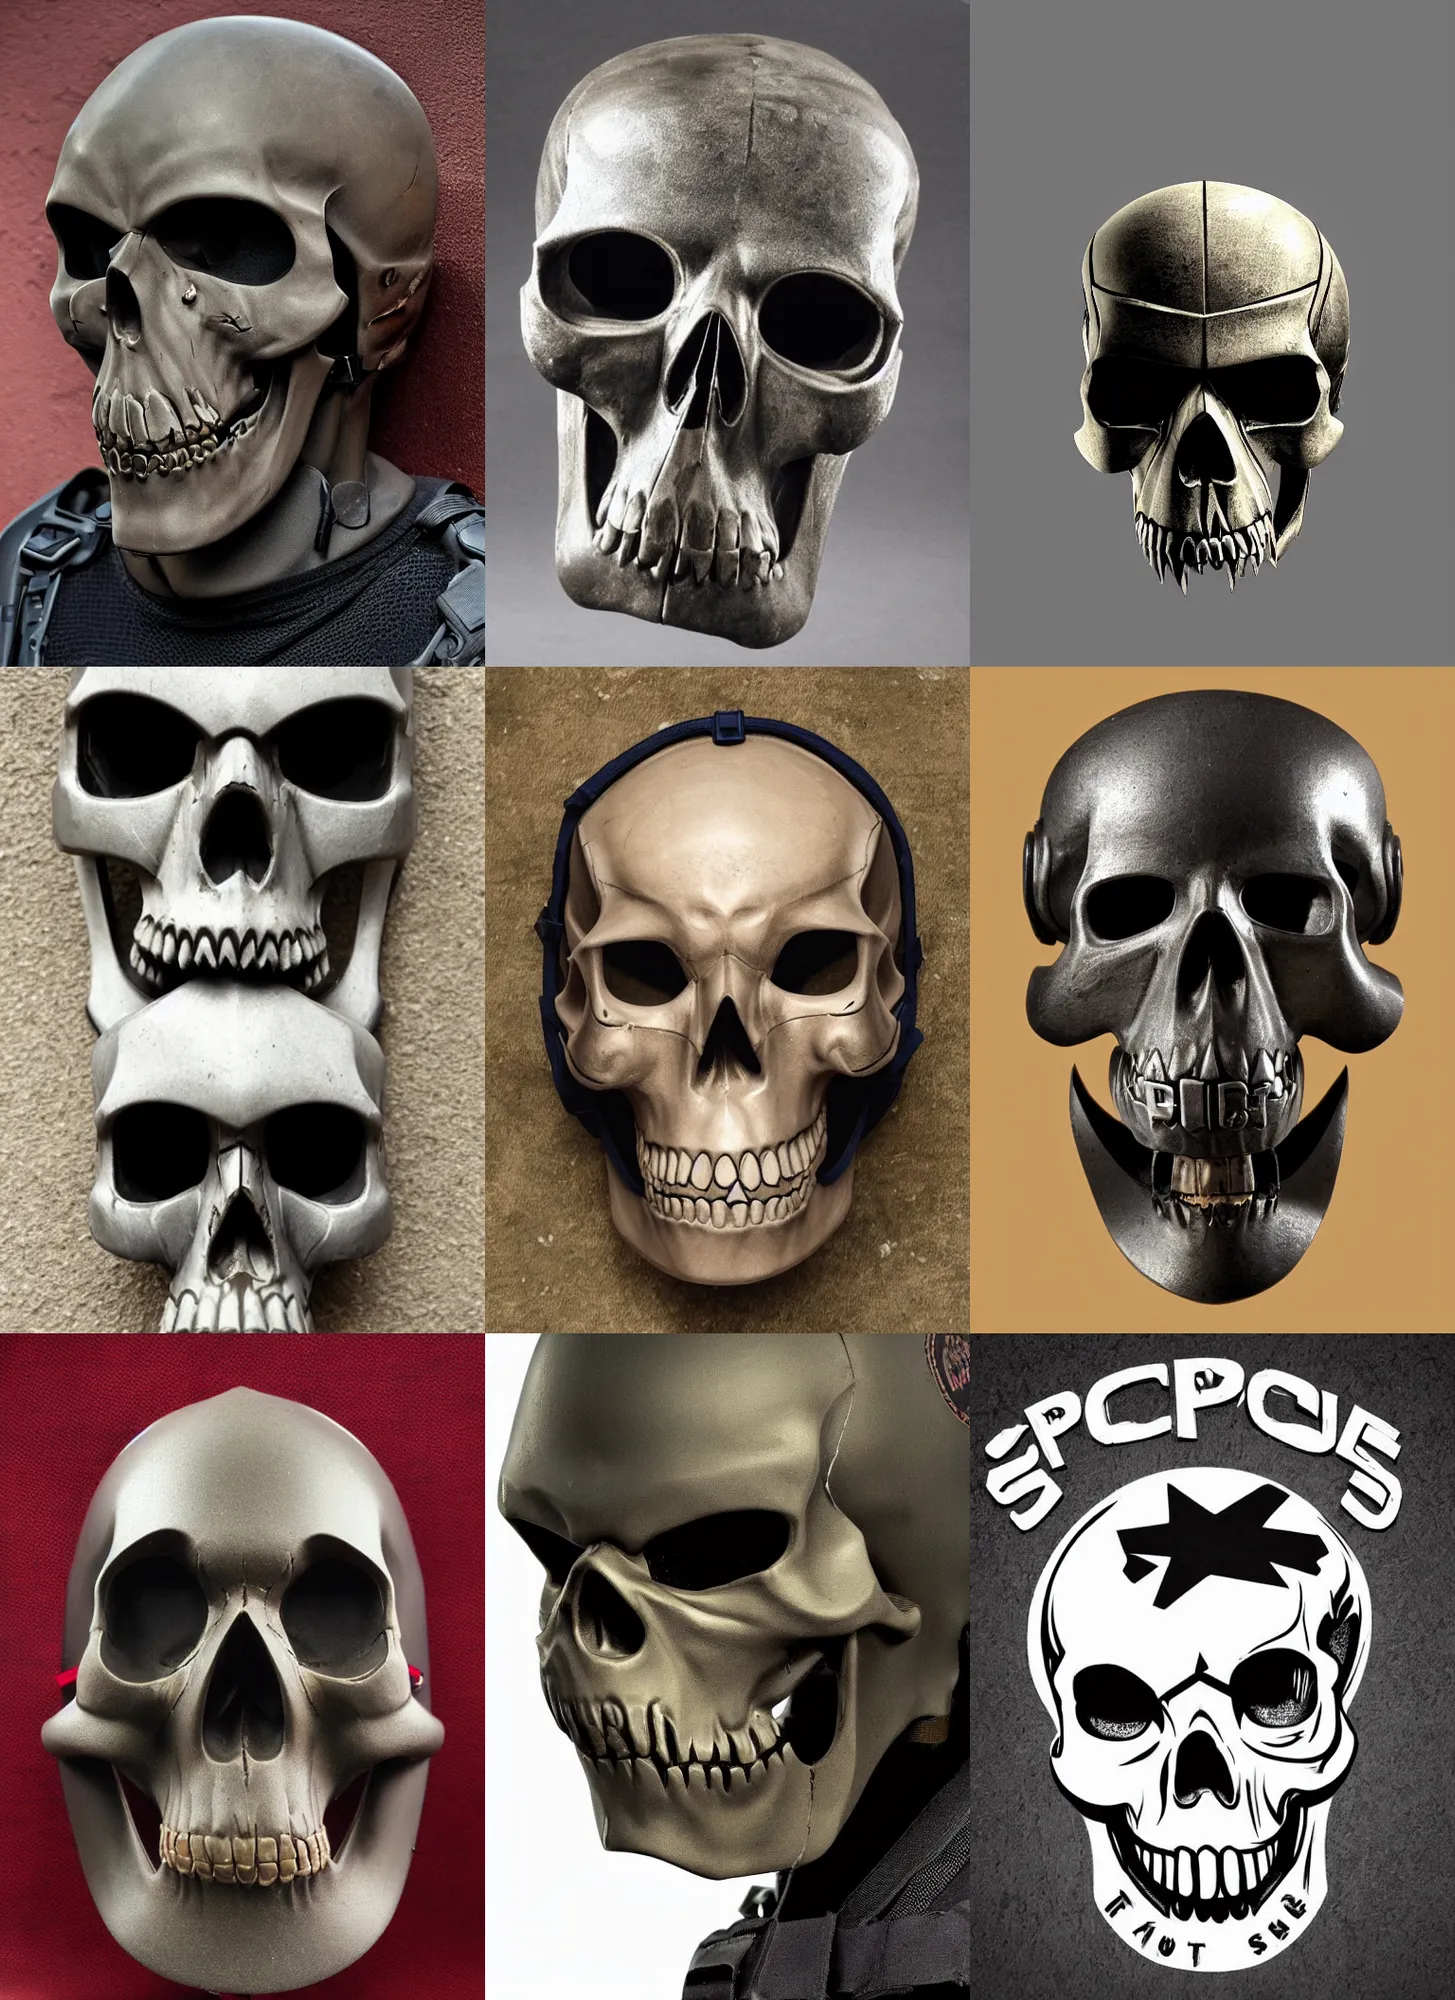 Prompt: spec ops mask, skull - logotype on helmet